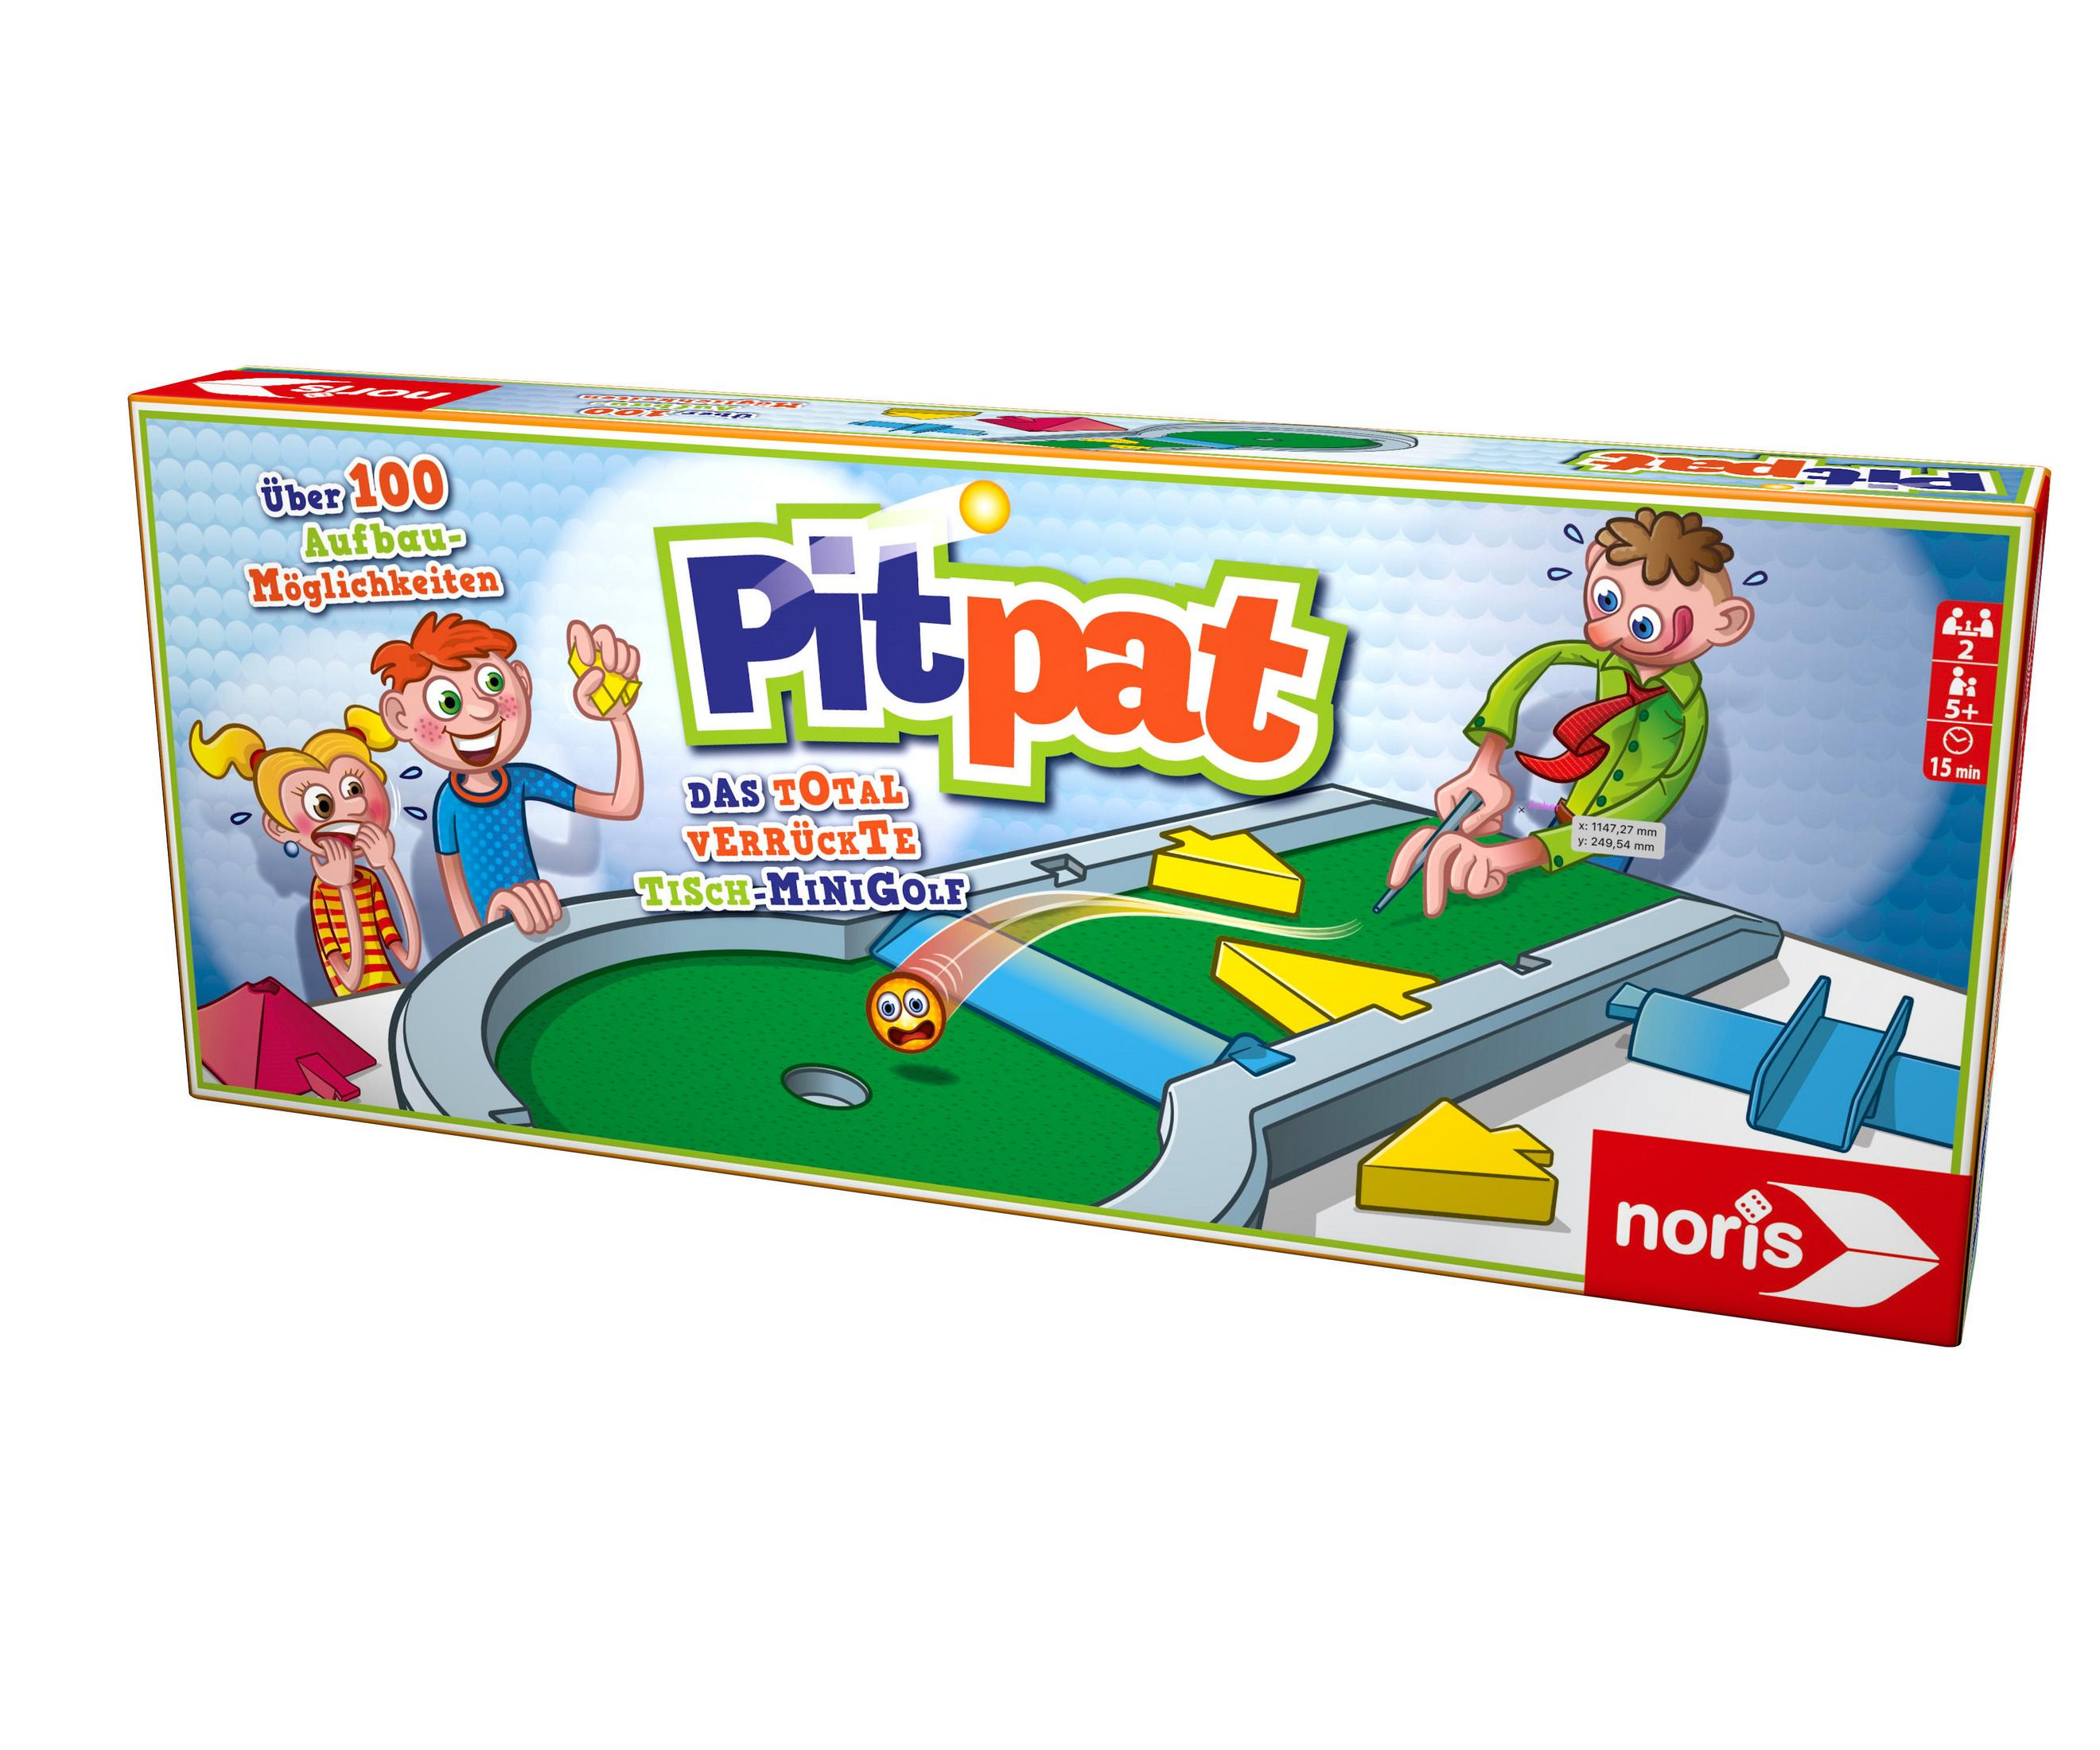 NORIS 606064190 PITPAT Actionspiel Mehrfarbig TISCH-MINIGOLF